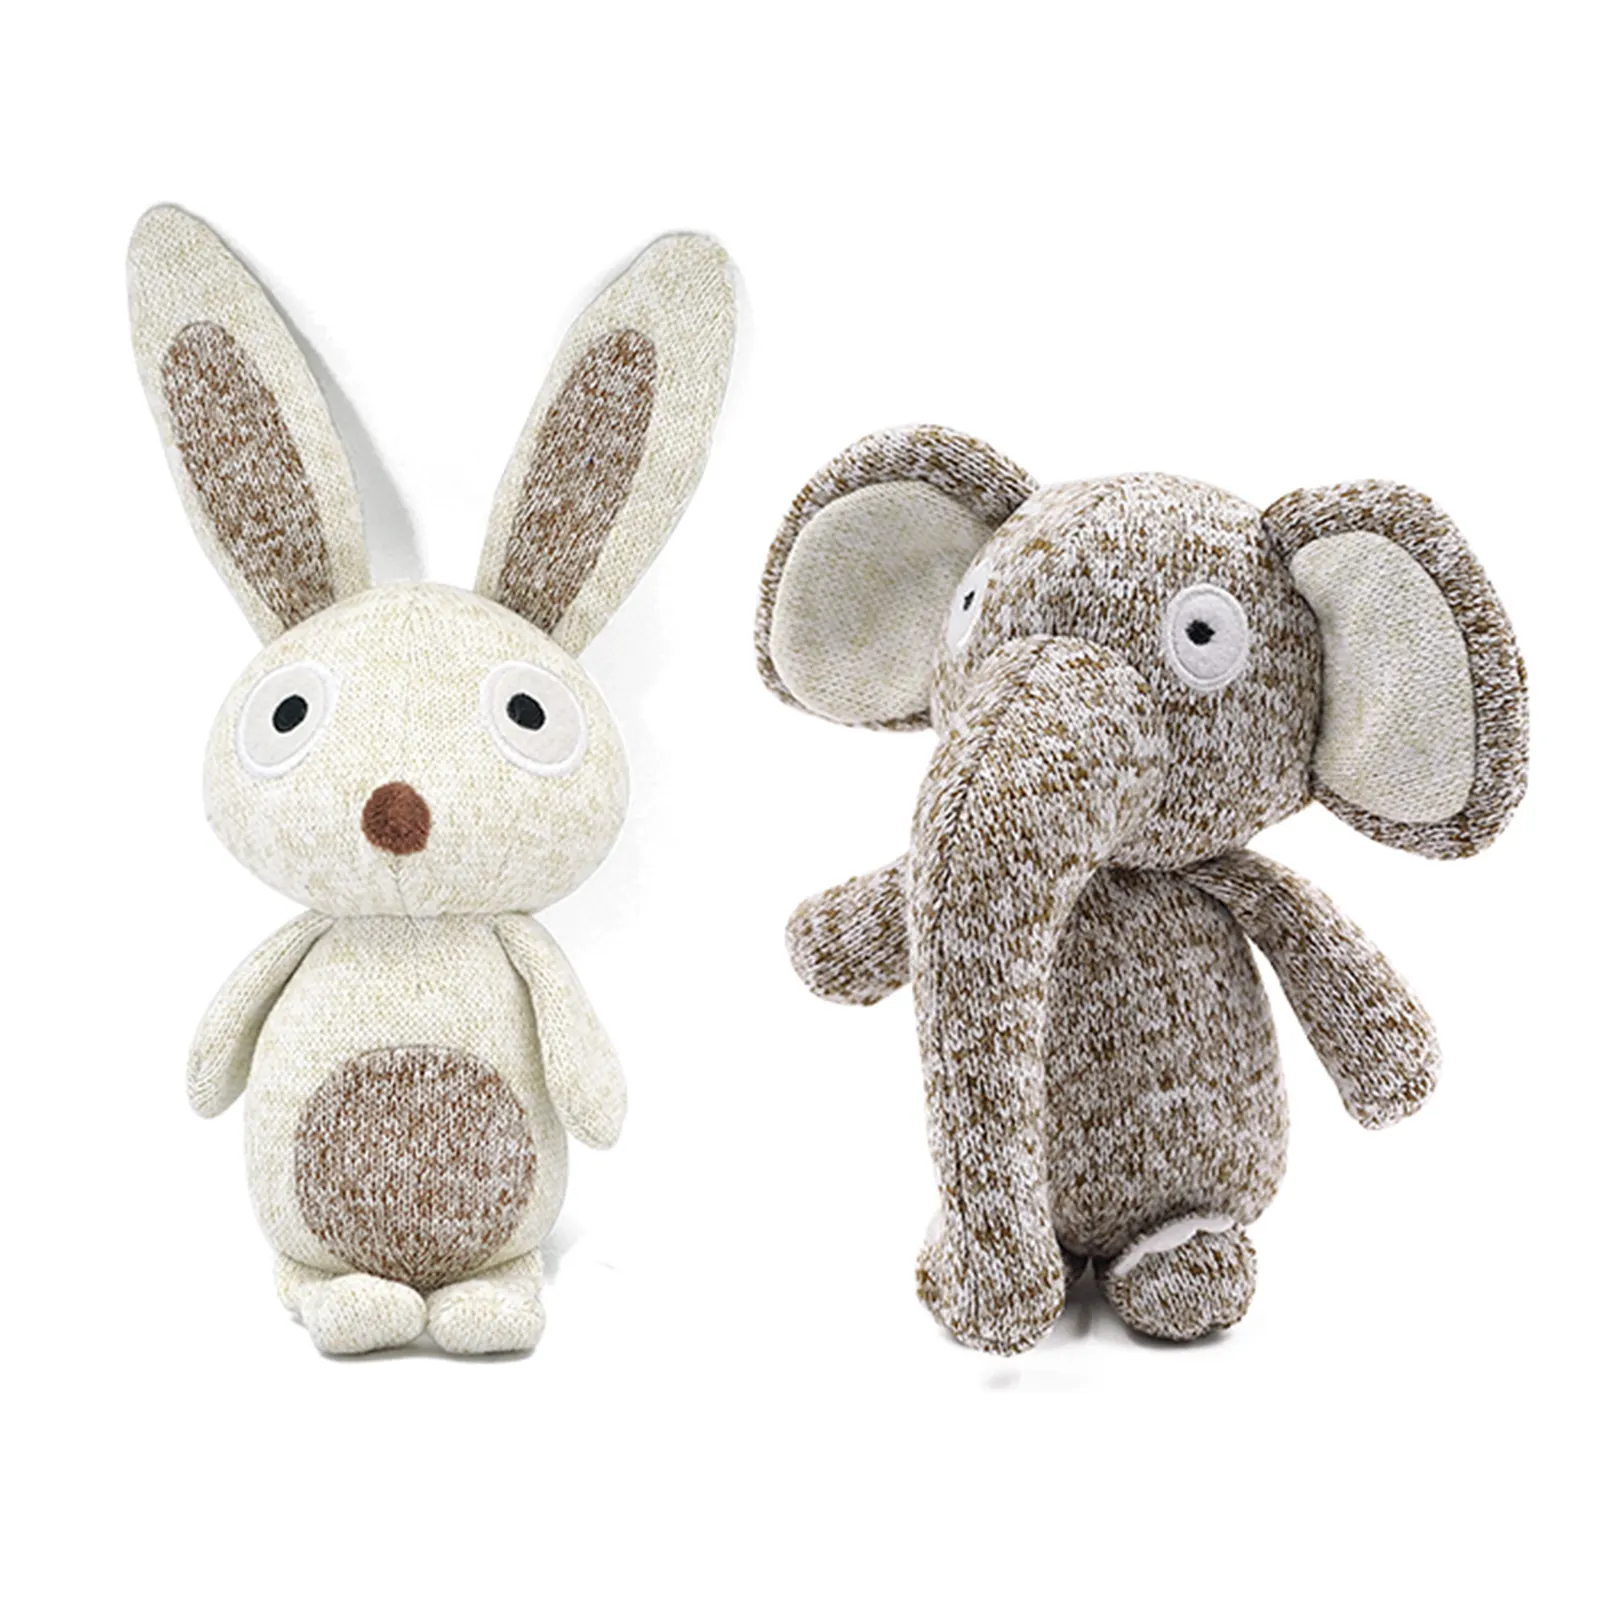 Stock Wholesale Dog Chew Toy Cute Elephant Soft Knit Plush Stuffed Squeaky Dog Luxury Toy